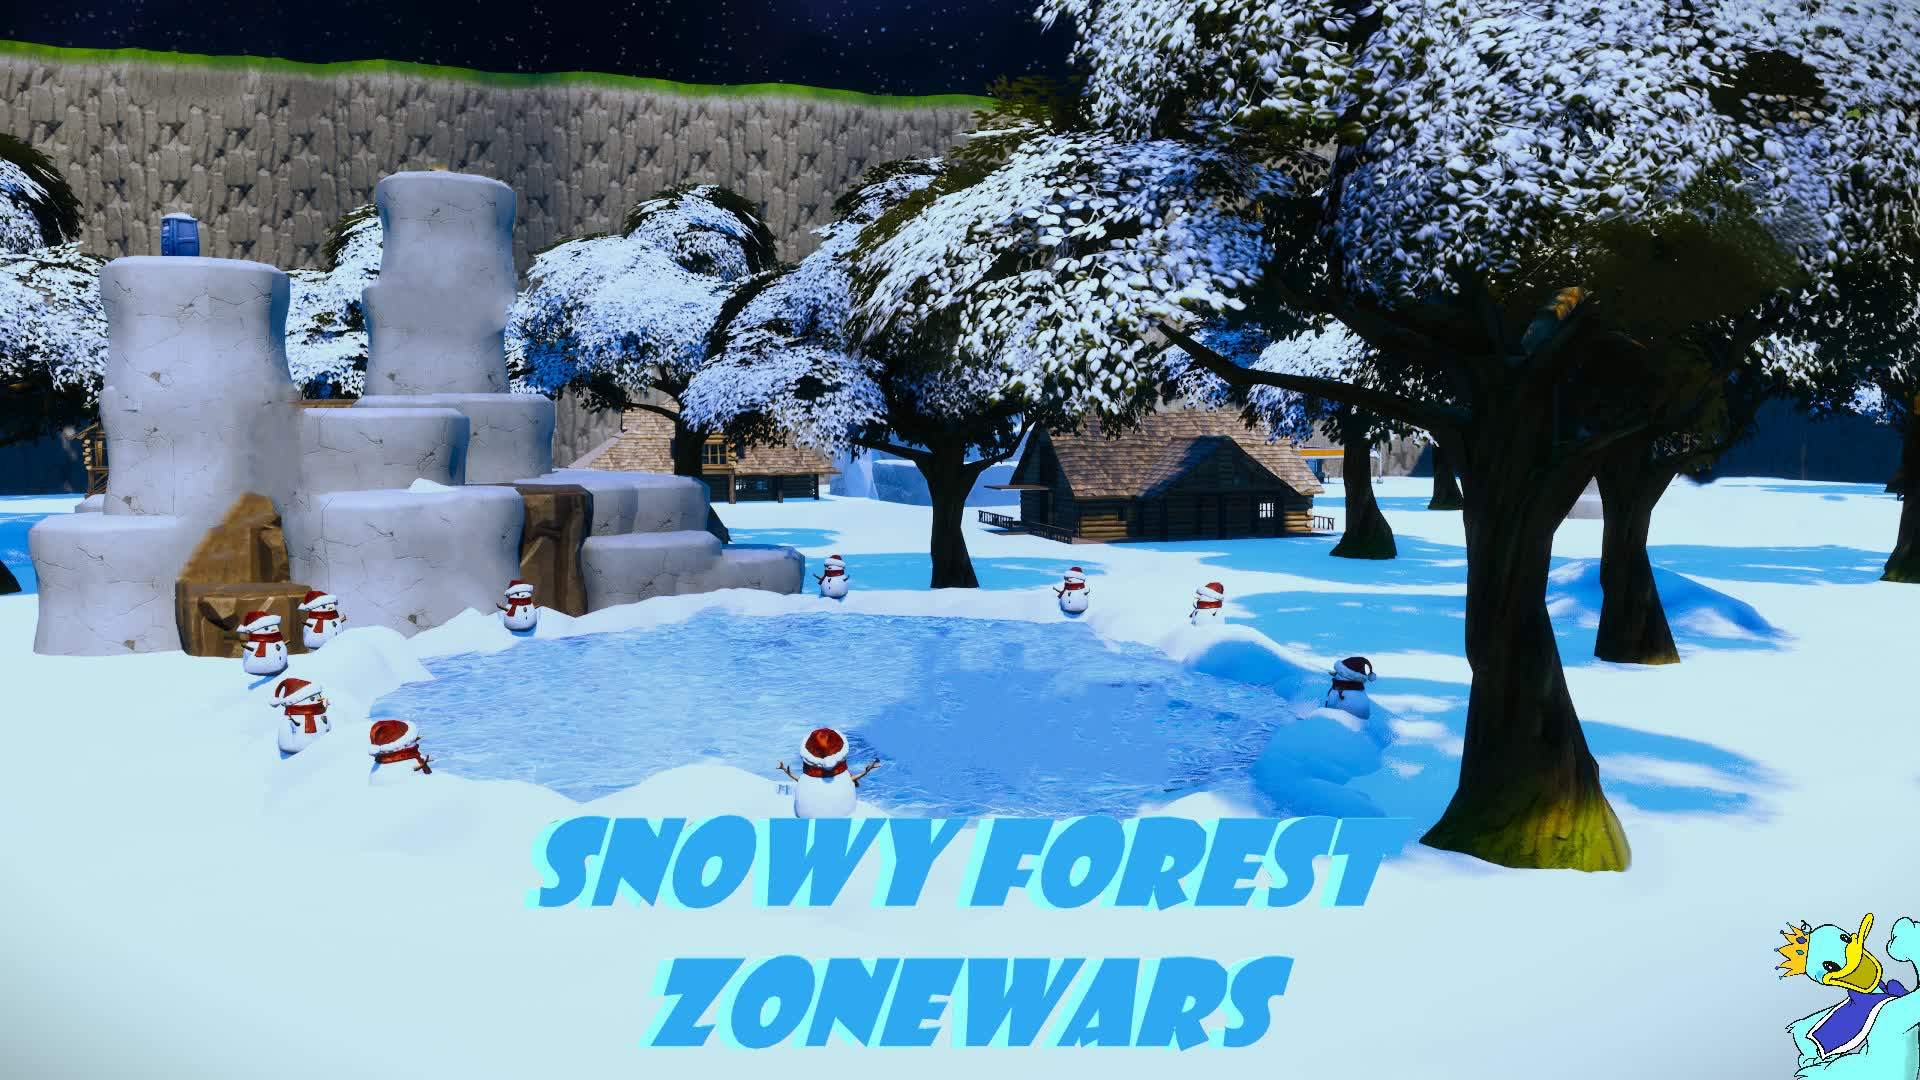 Snowy Forest Zonewars